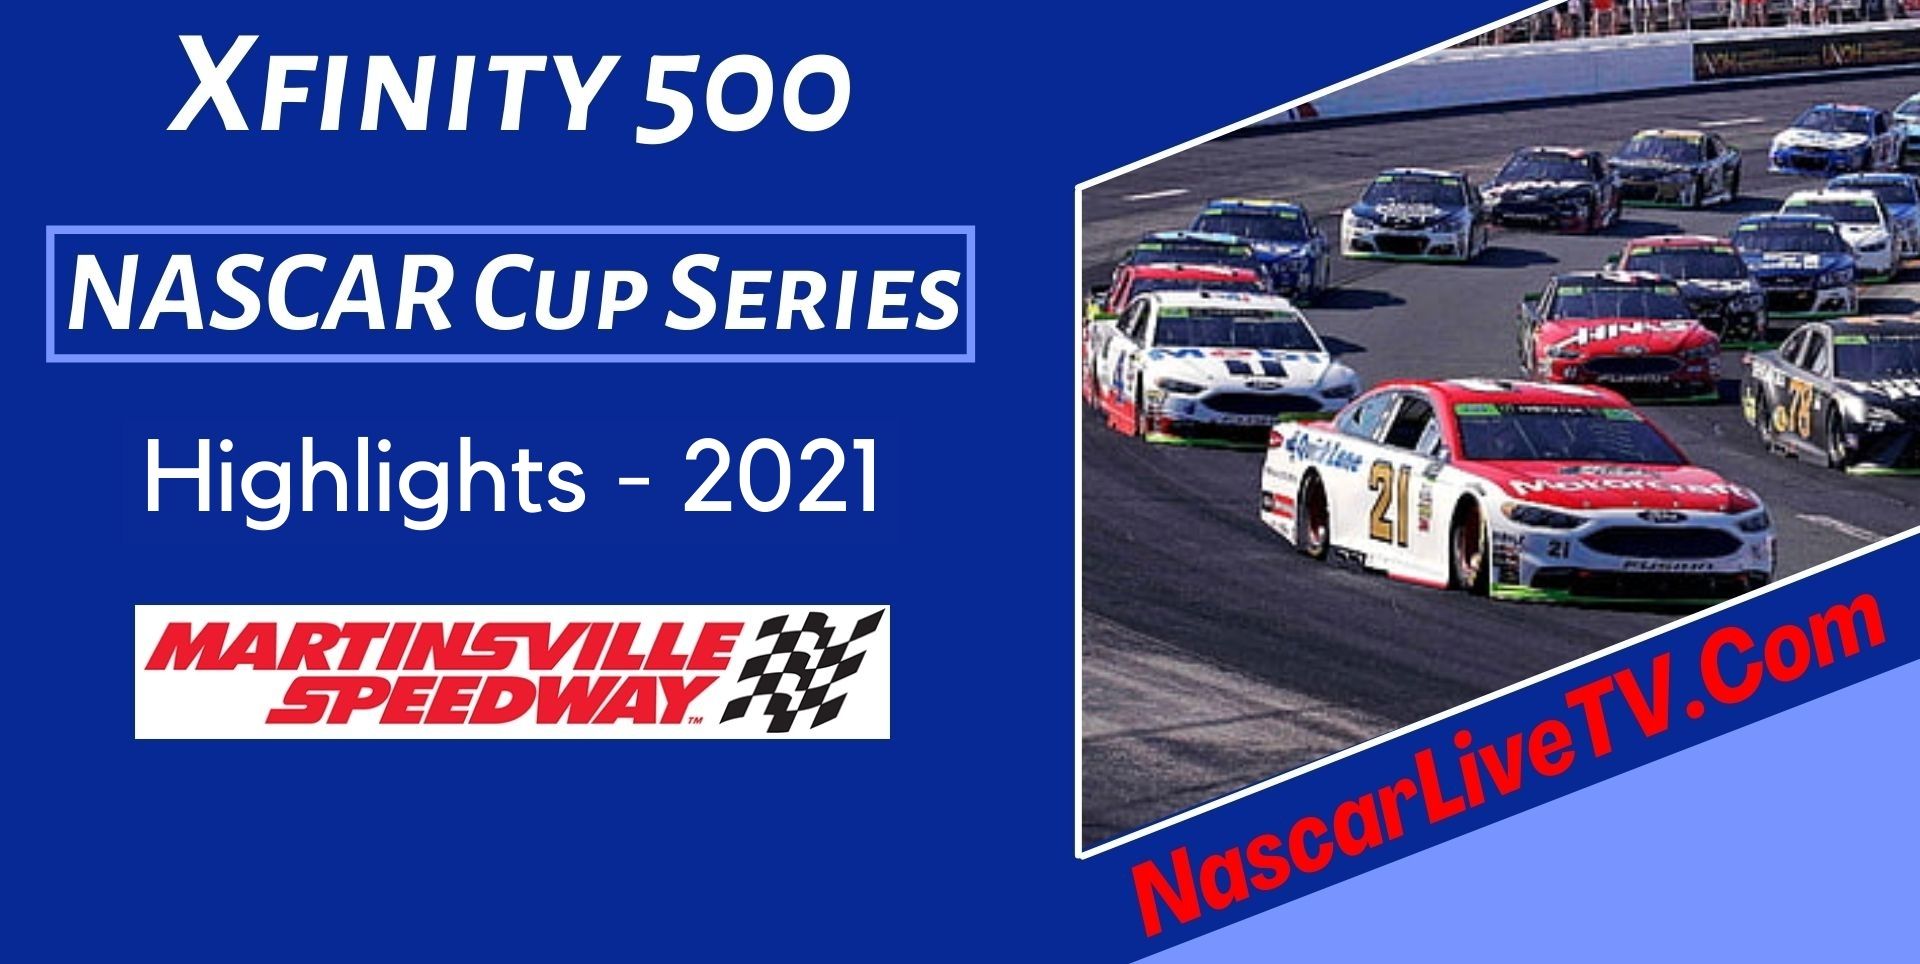 XFINITY 500 Highlights NASCAR Cup Series 2021